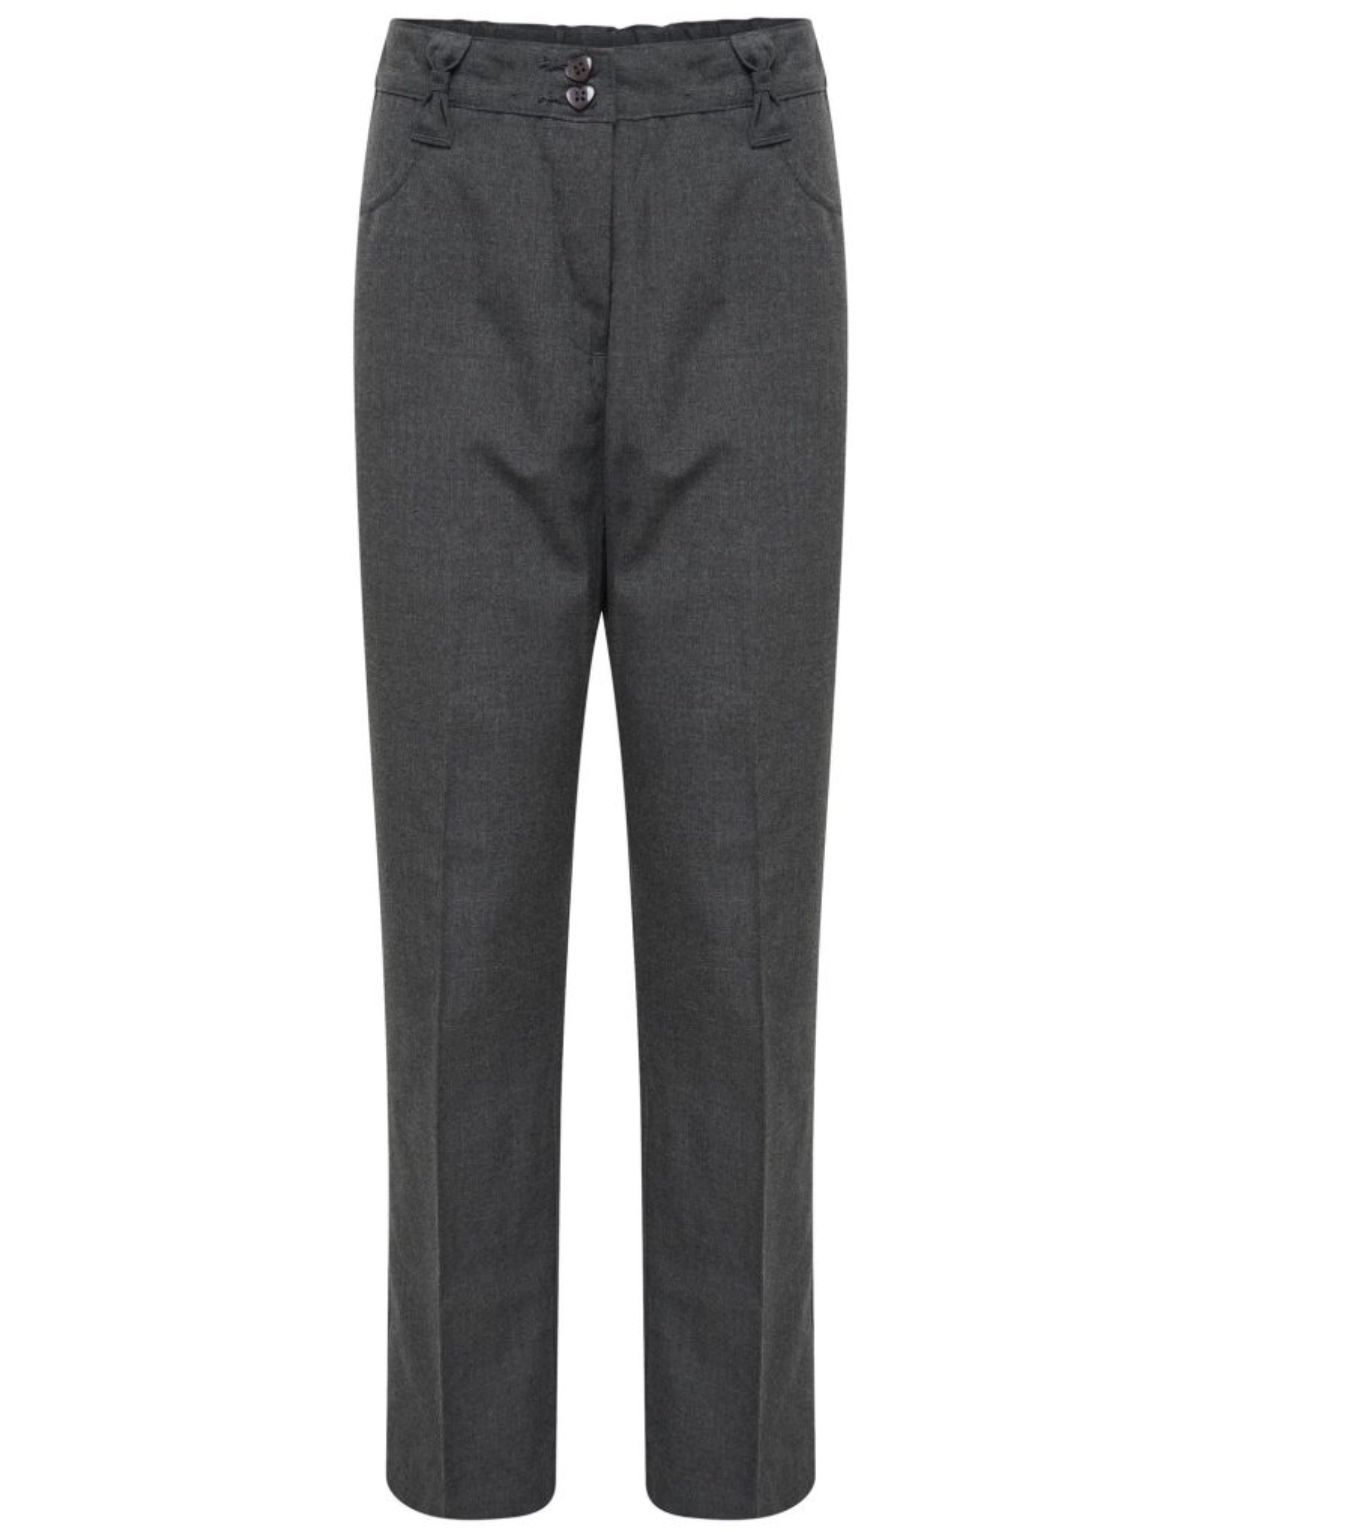 Girls' Grey School Trousers, Adjustable Waist, Zip Fly, Side Pockets, Plain Front 5-6 Y